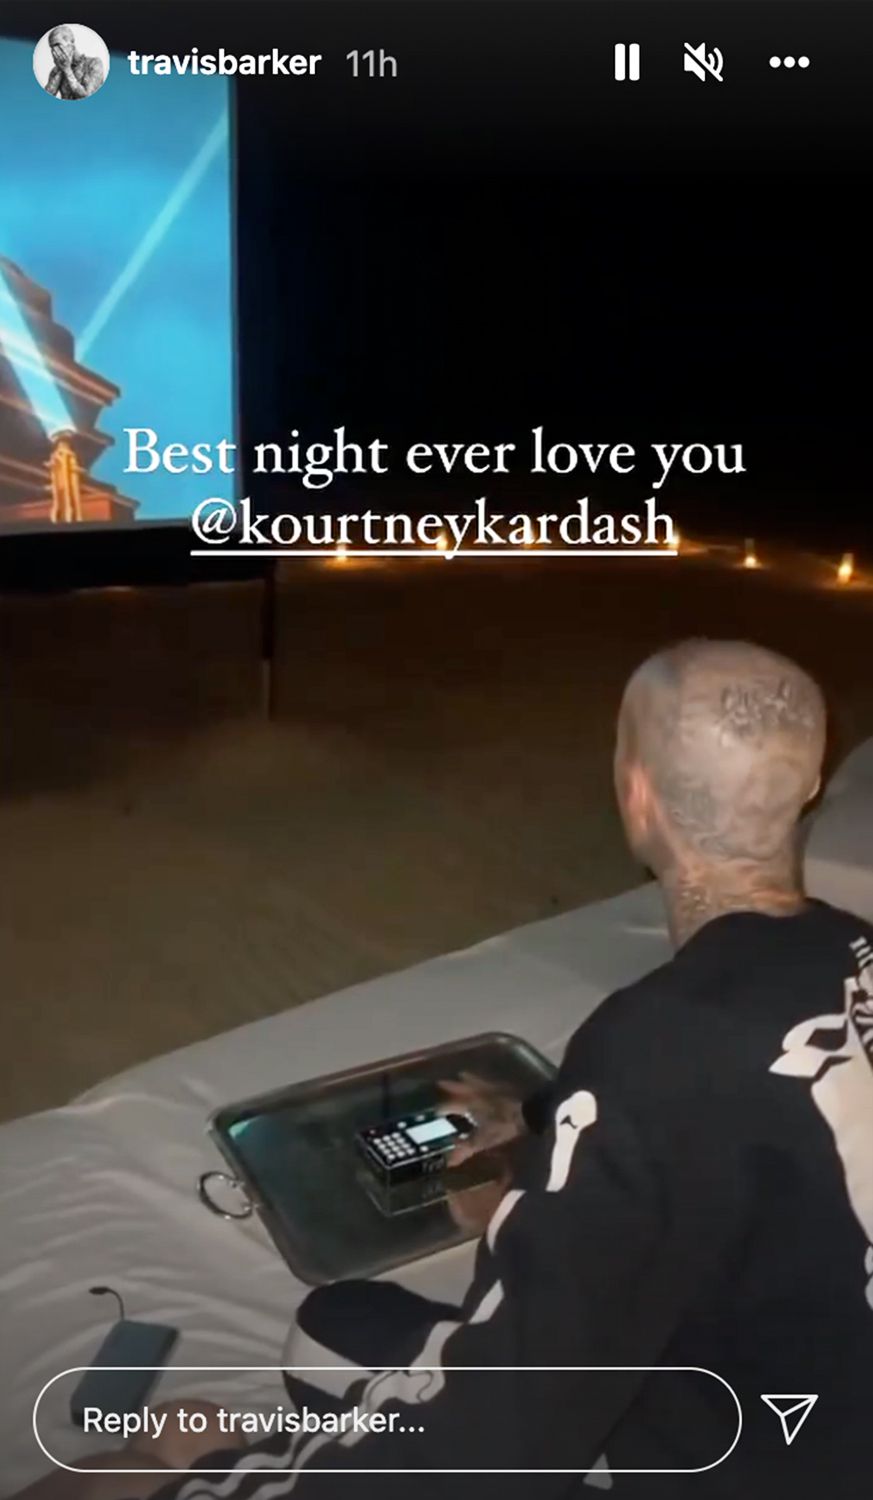 Kourtney Kardashian and Travis Barker Enjoy Beachside Movie Night with Fireworks: 'Best Night Ever'